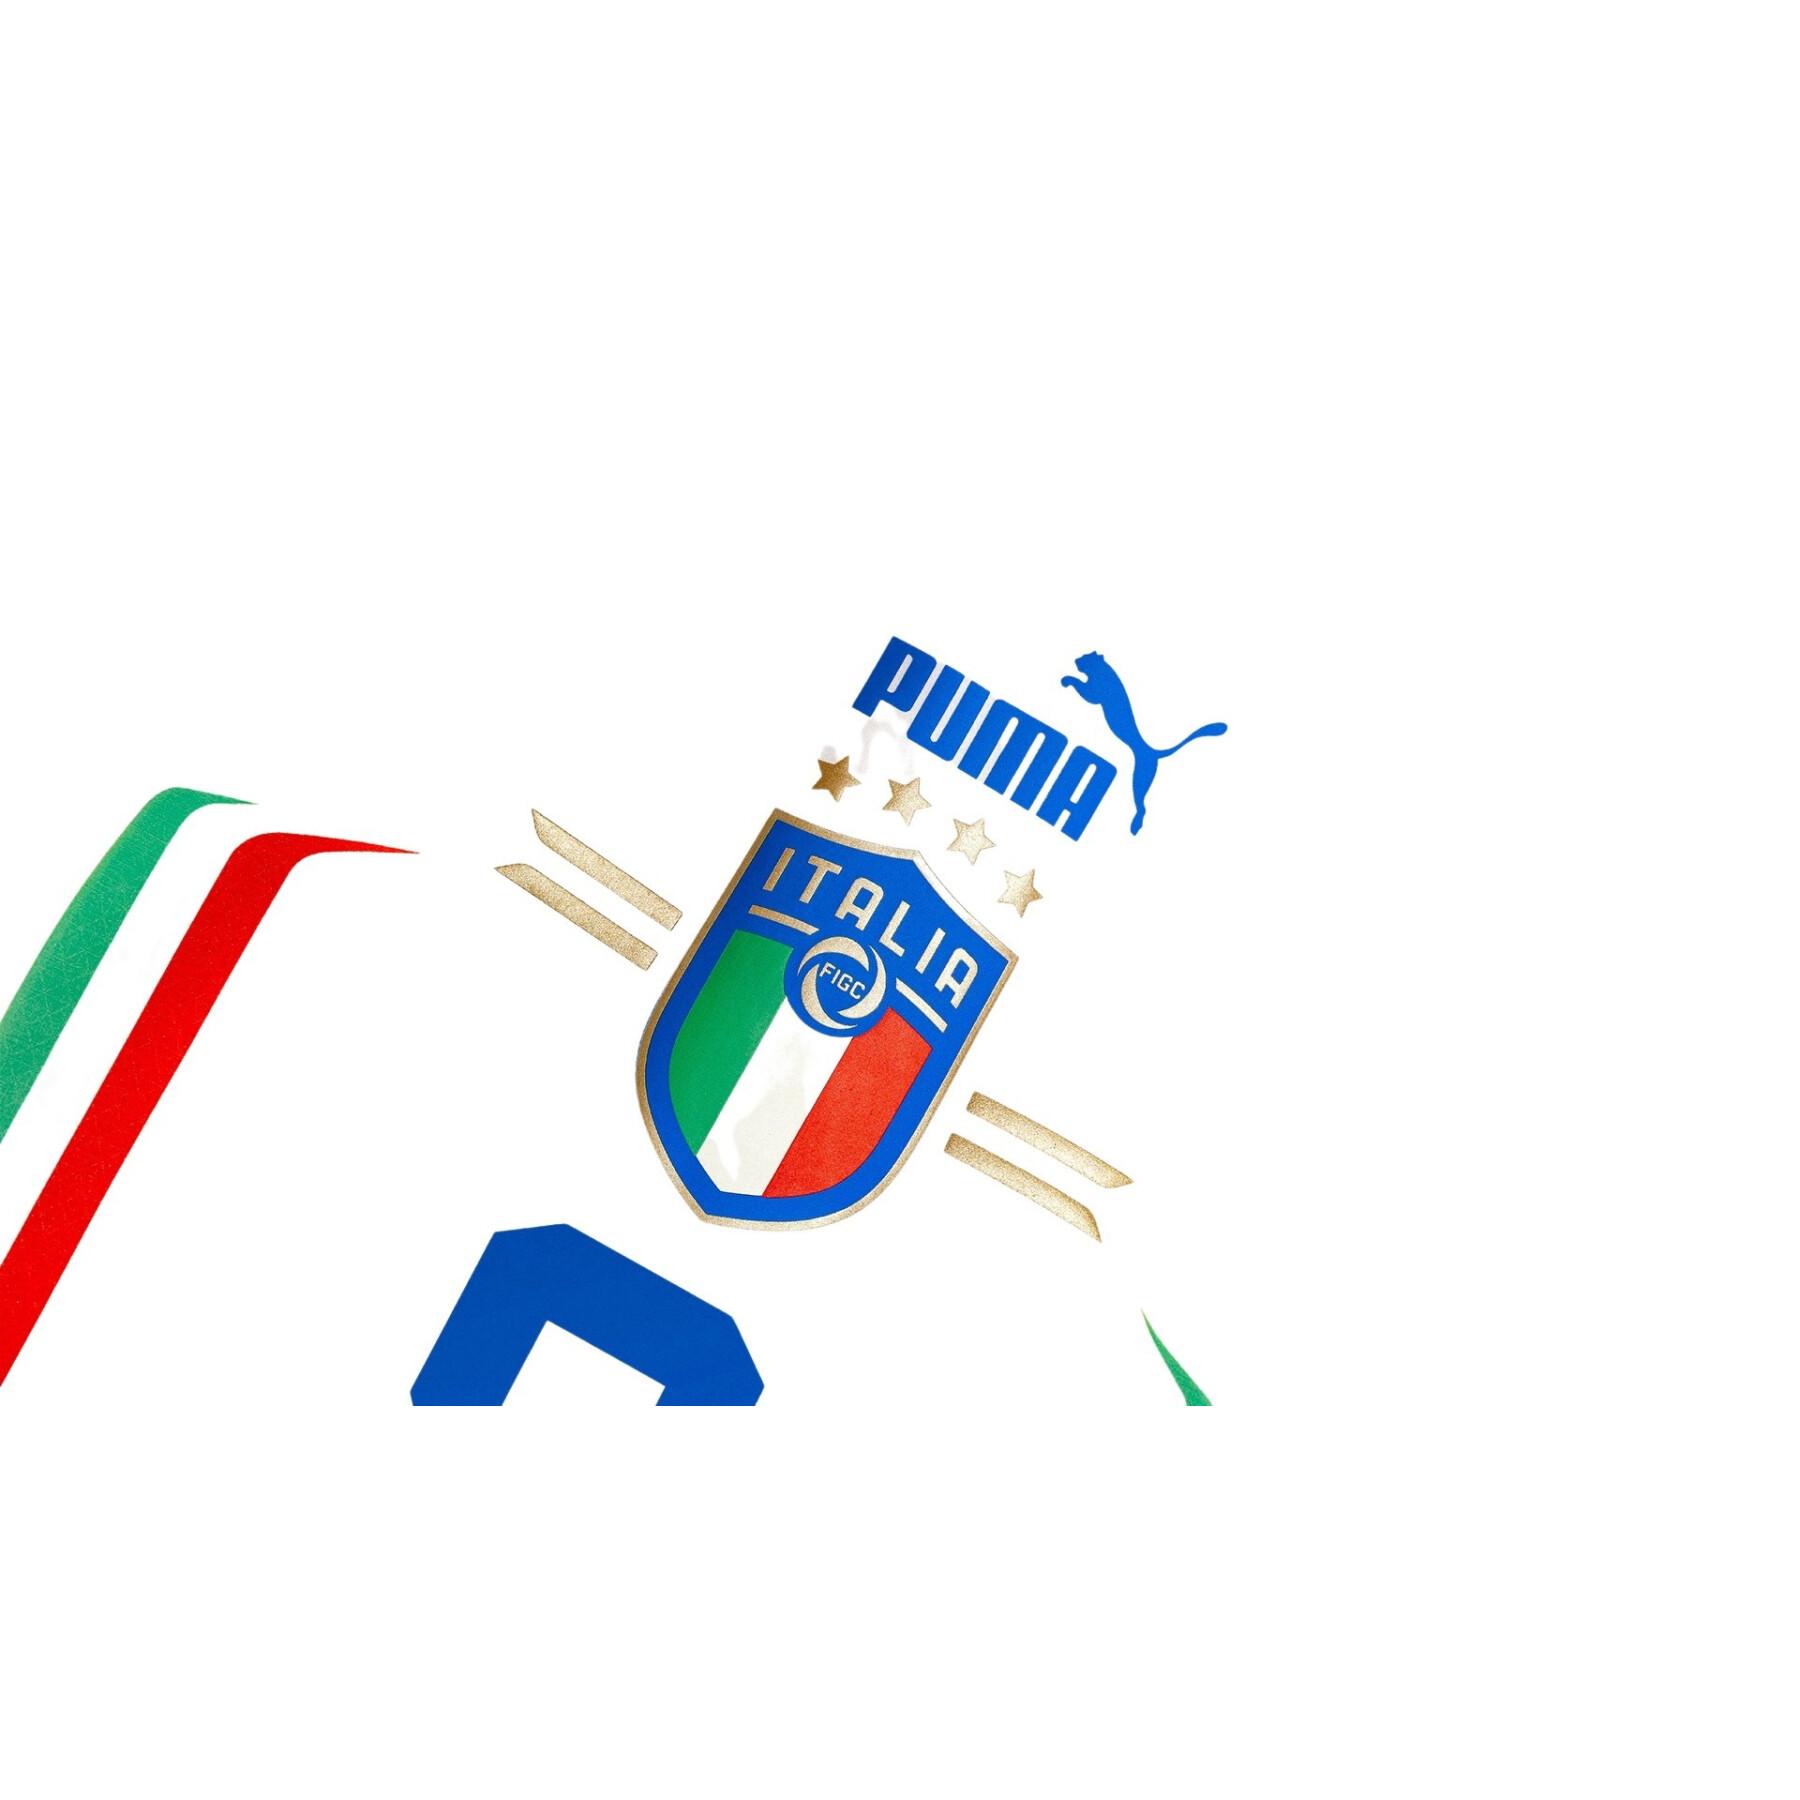 Away jersey Italie 2022/23